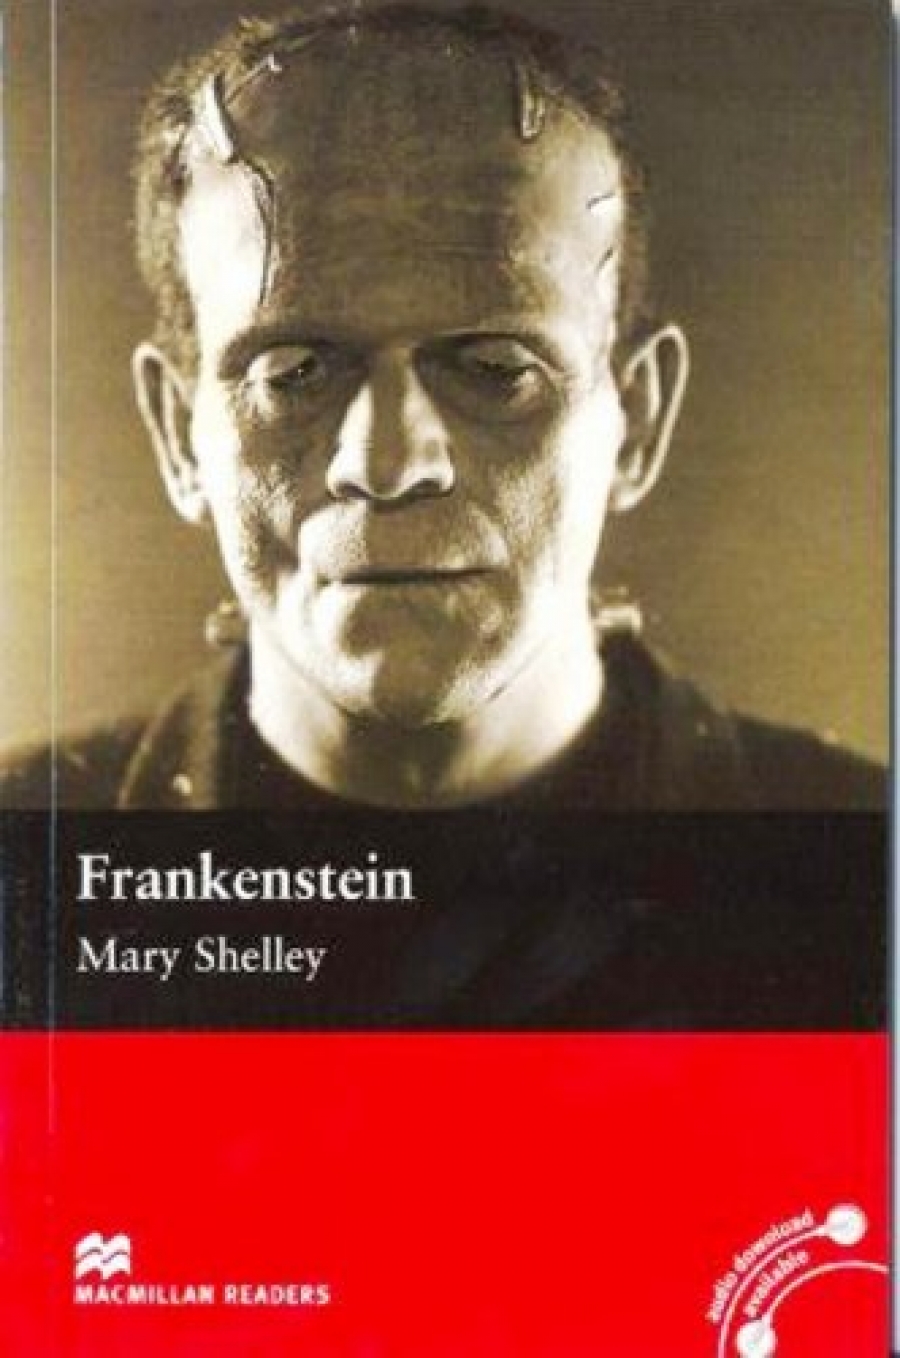 Mary Shelley, retold by Margaret Tarner Frankenstein 